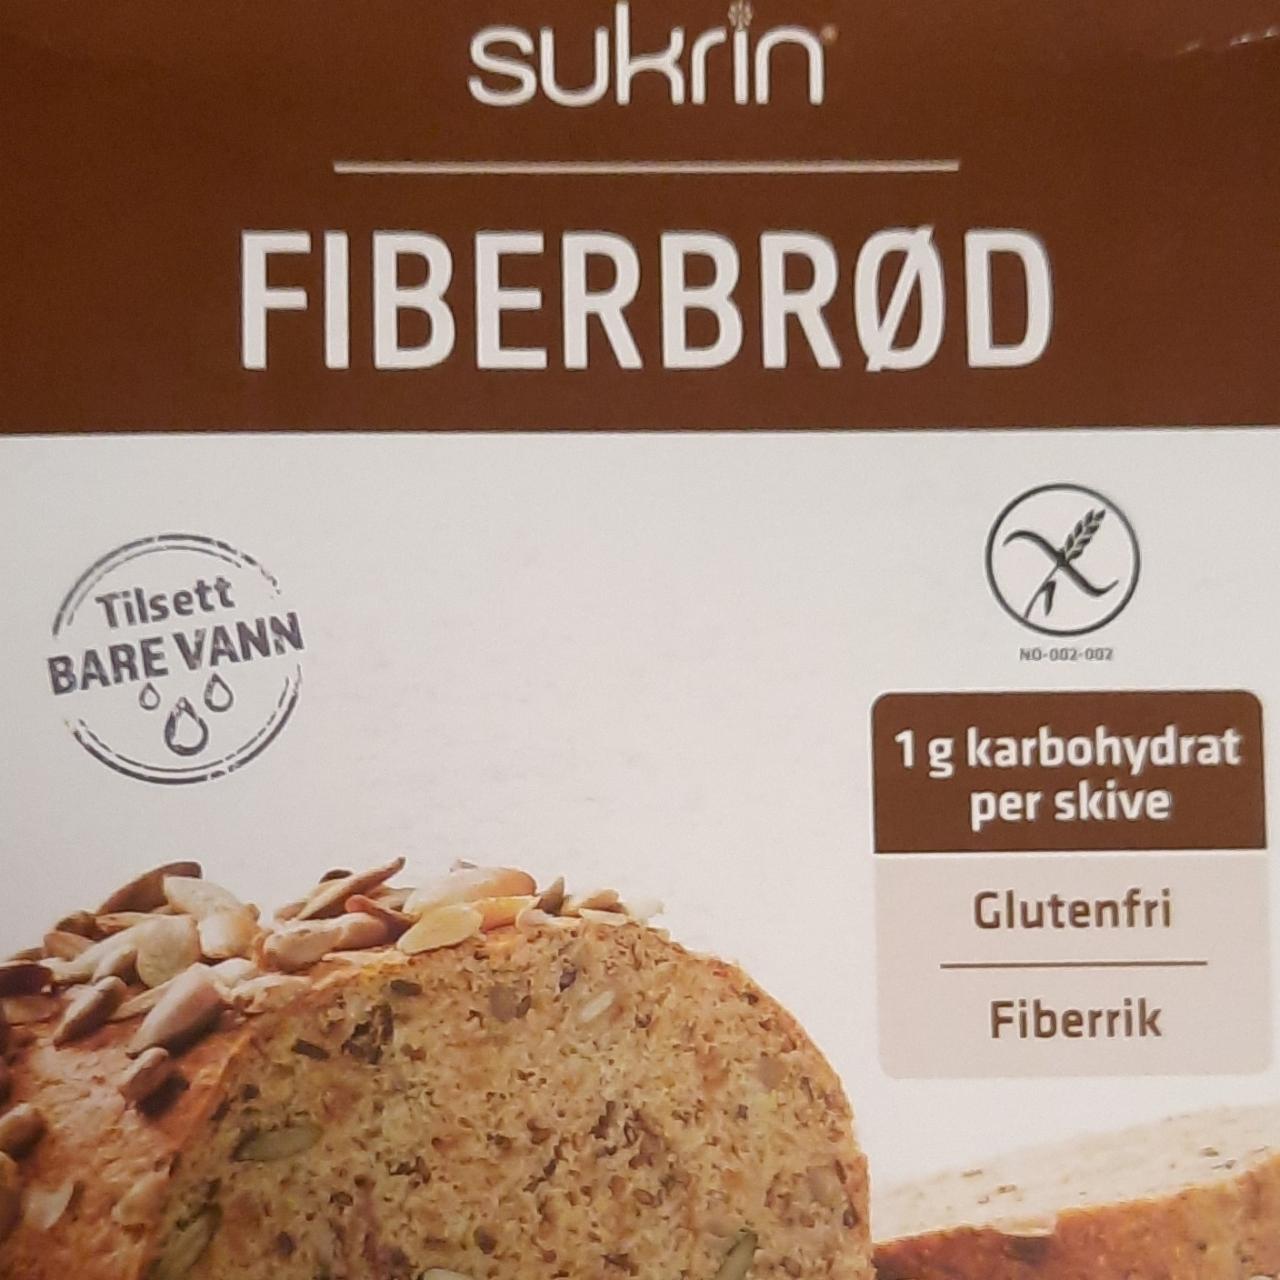 Фото - хлеб с клетчаткой fiberbrod Sukrin